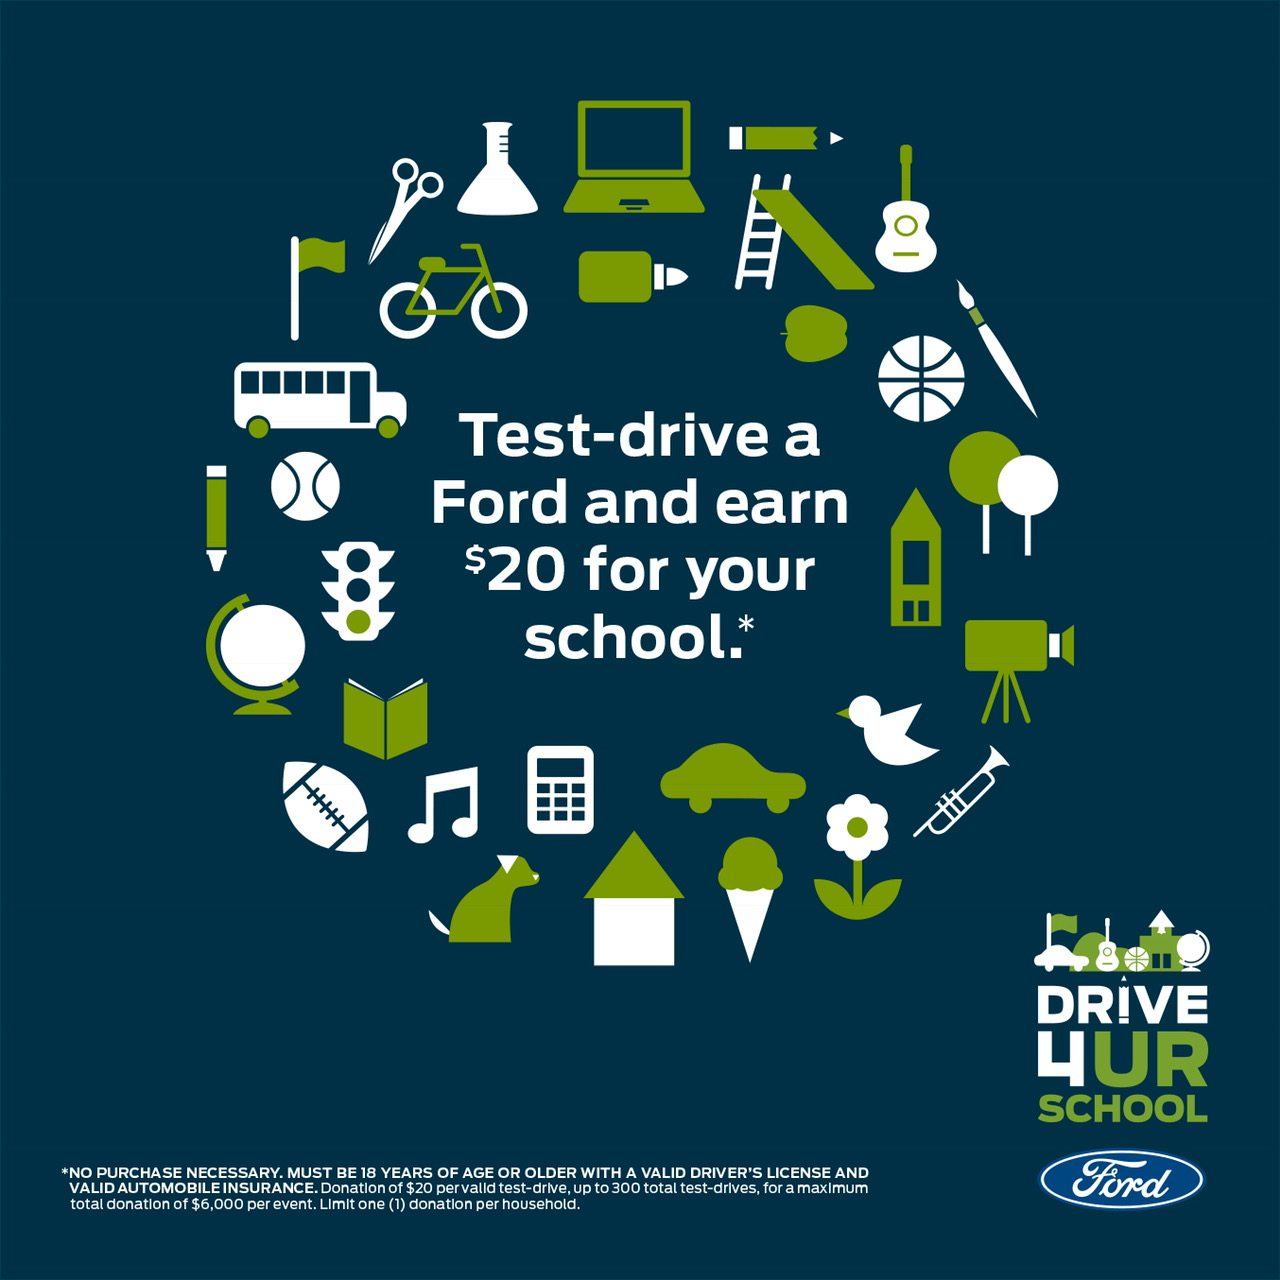 Ford Drive 4 UR School information